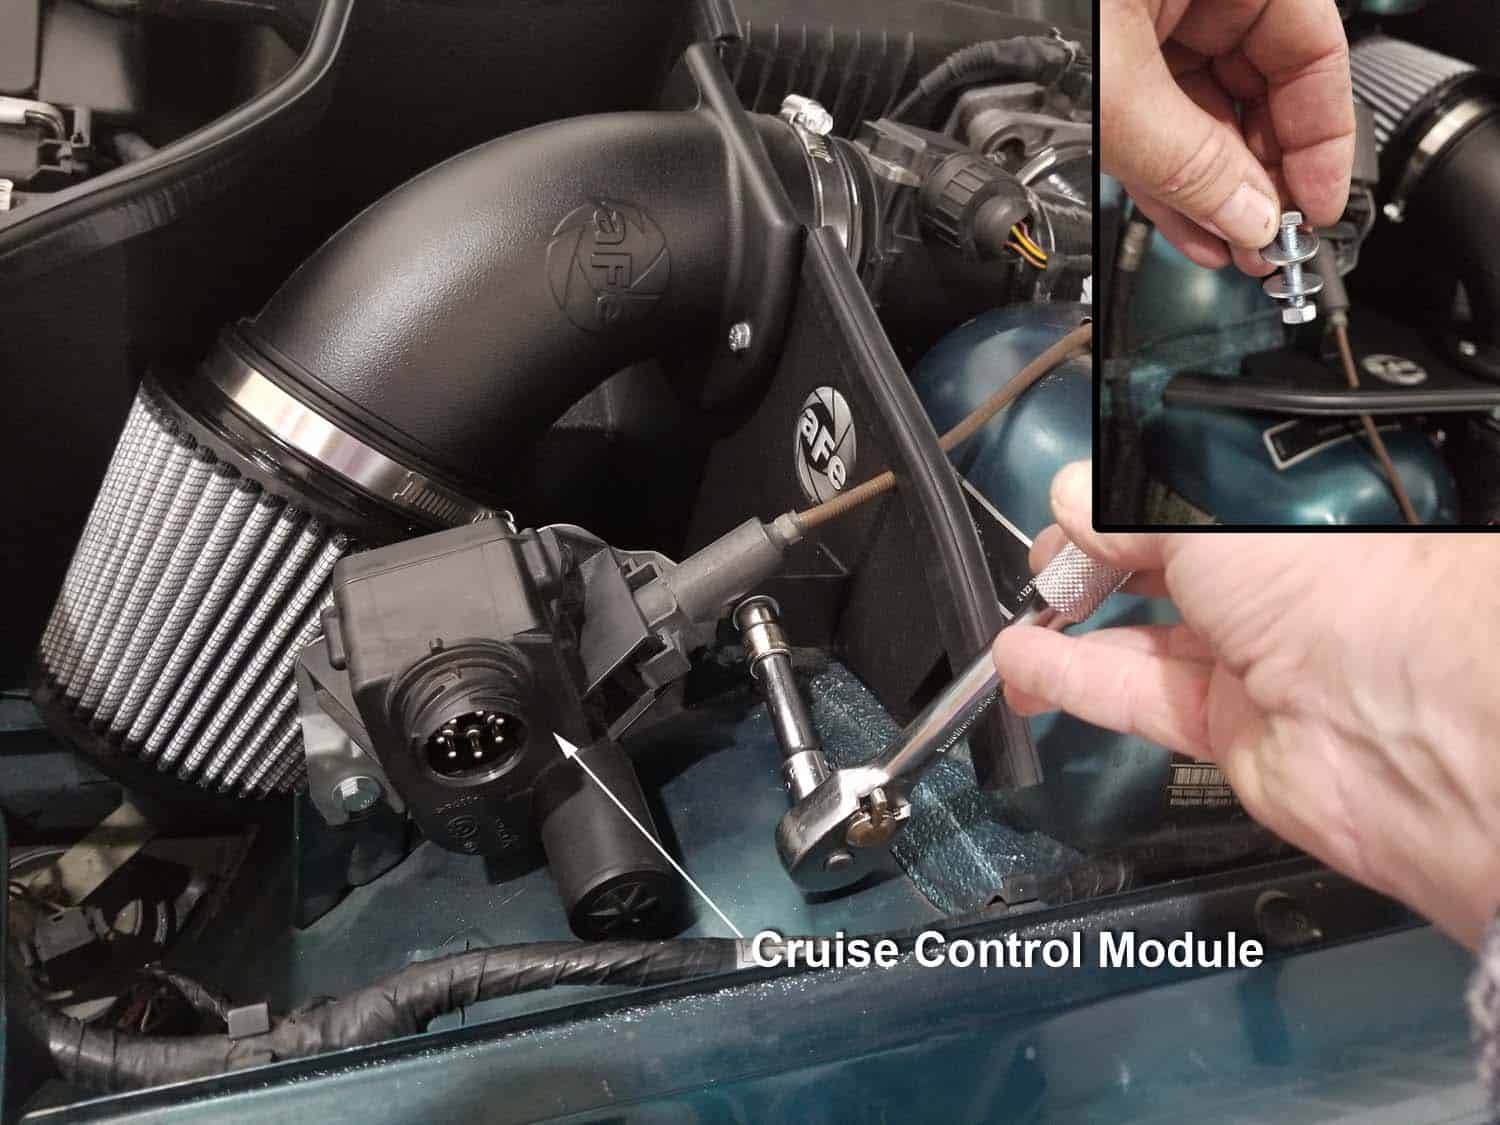 BMW E36 cold air intake - reinstall the cruise control module